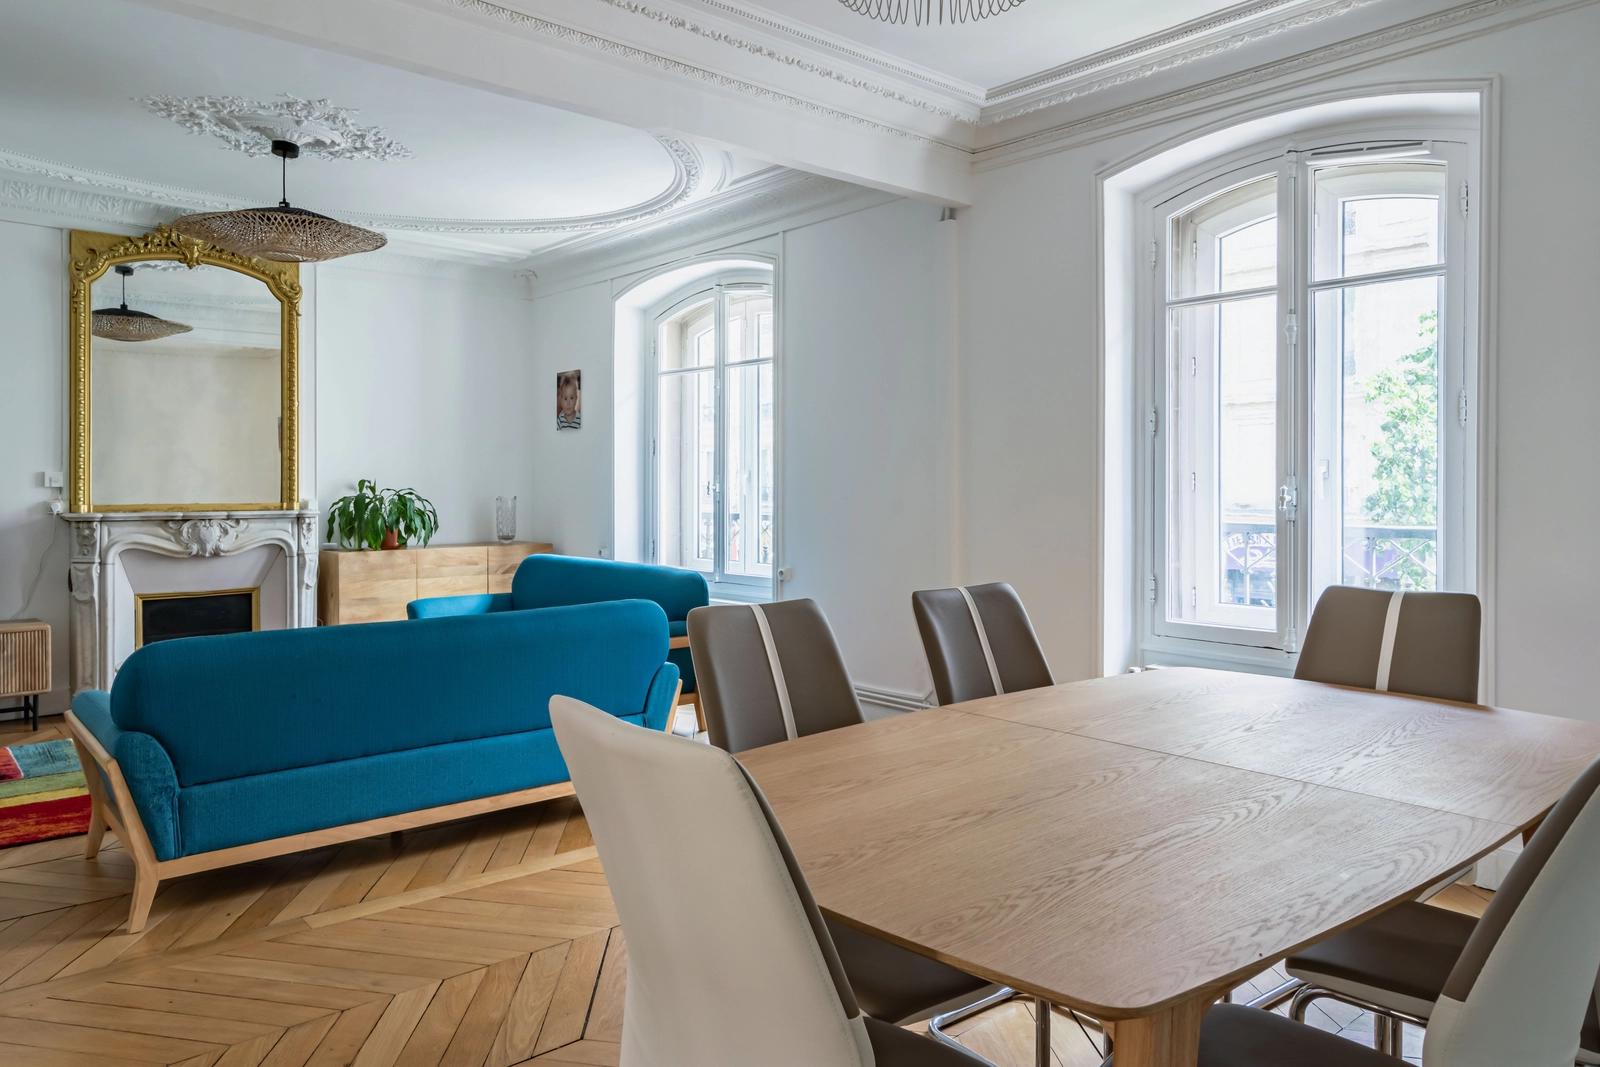 Meeting room in Beautiful Haussmann apartment - Paris 17th district - 1